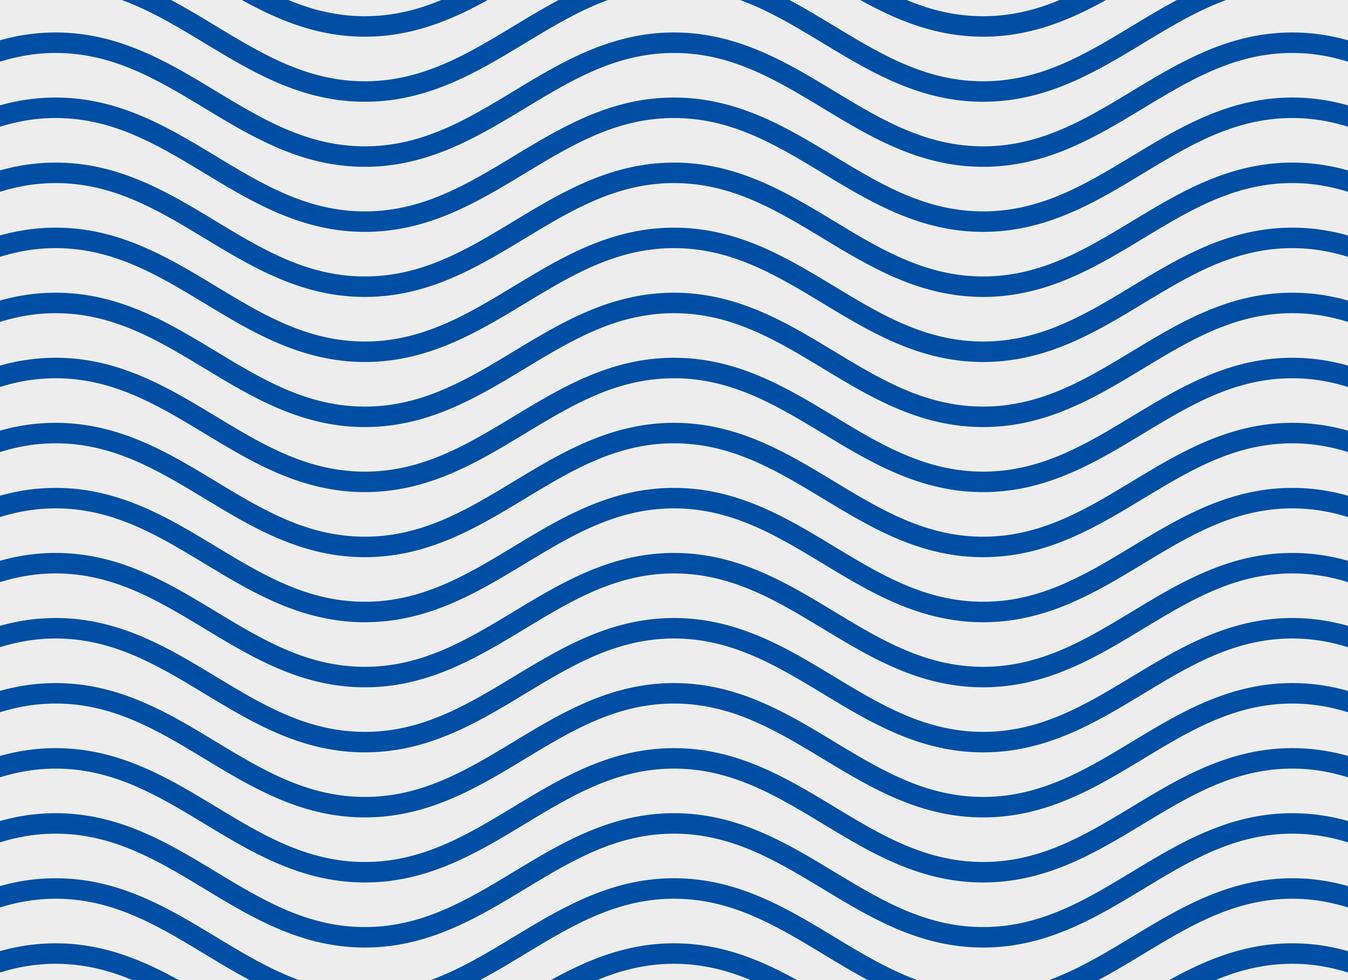 blue sine wave pattern background - Download Free Vector Art, Stock